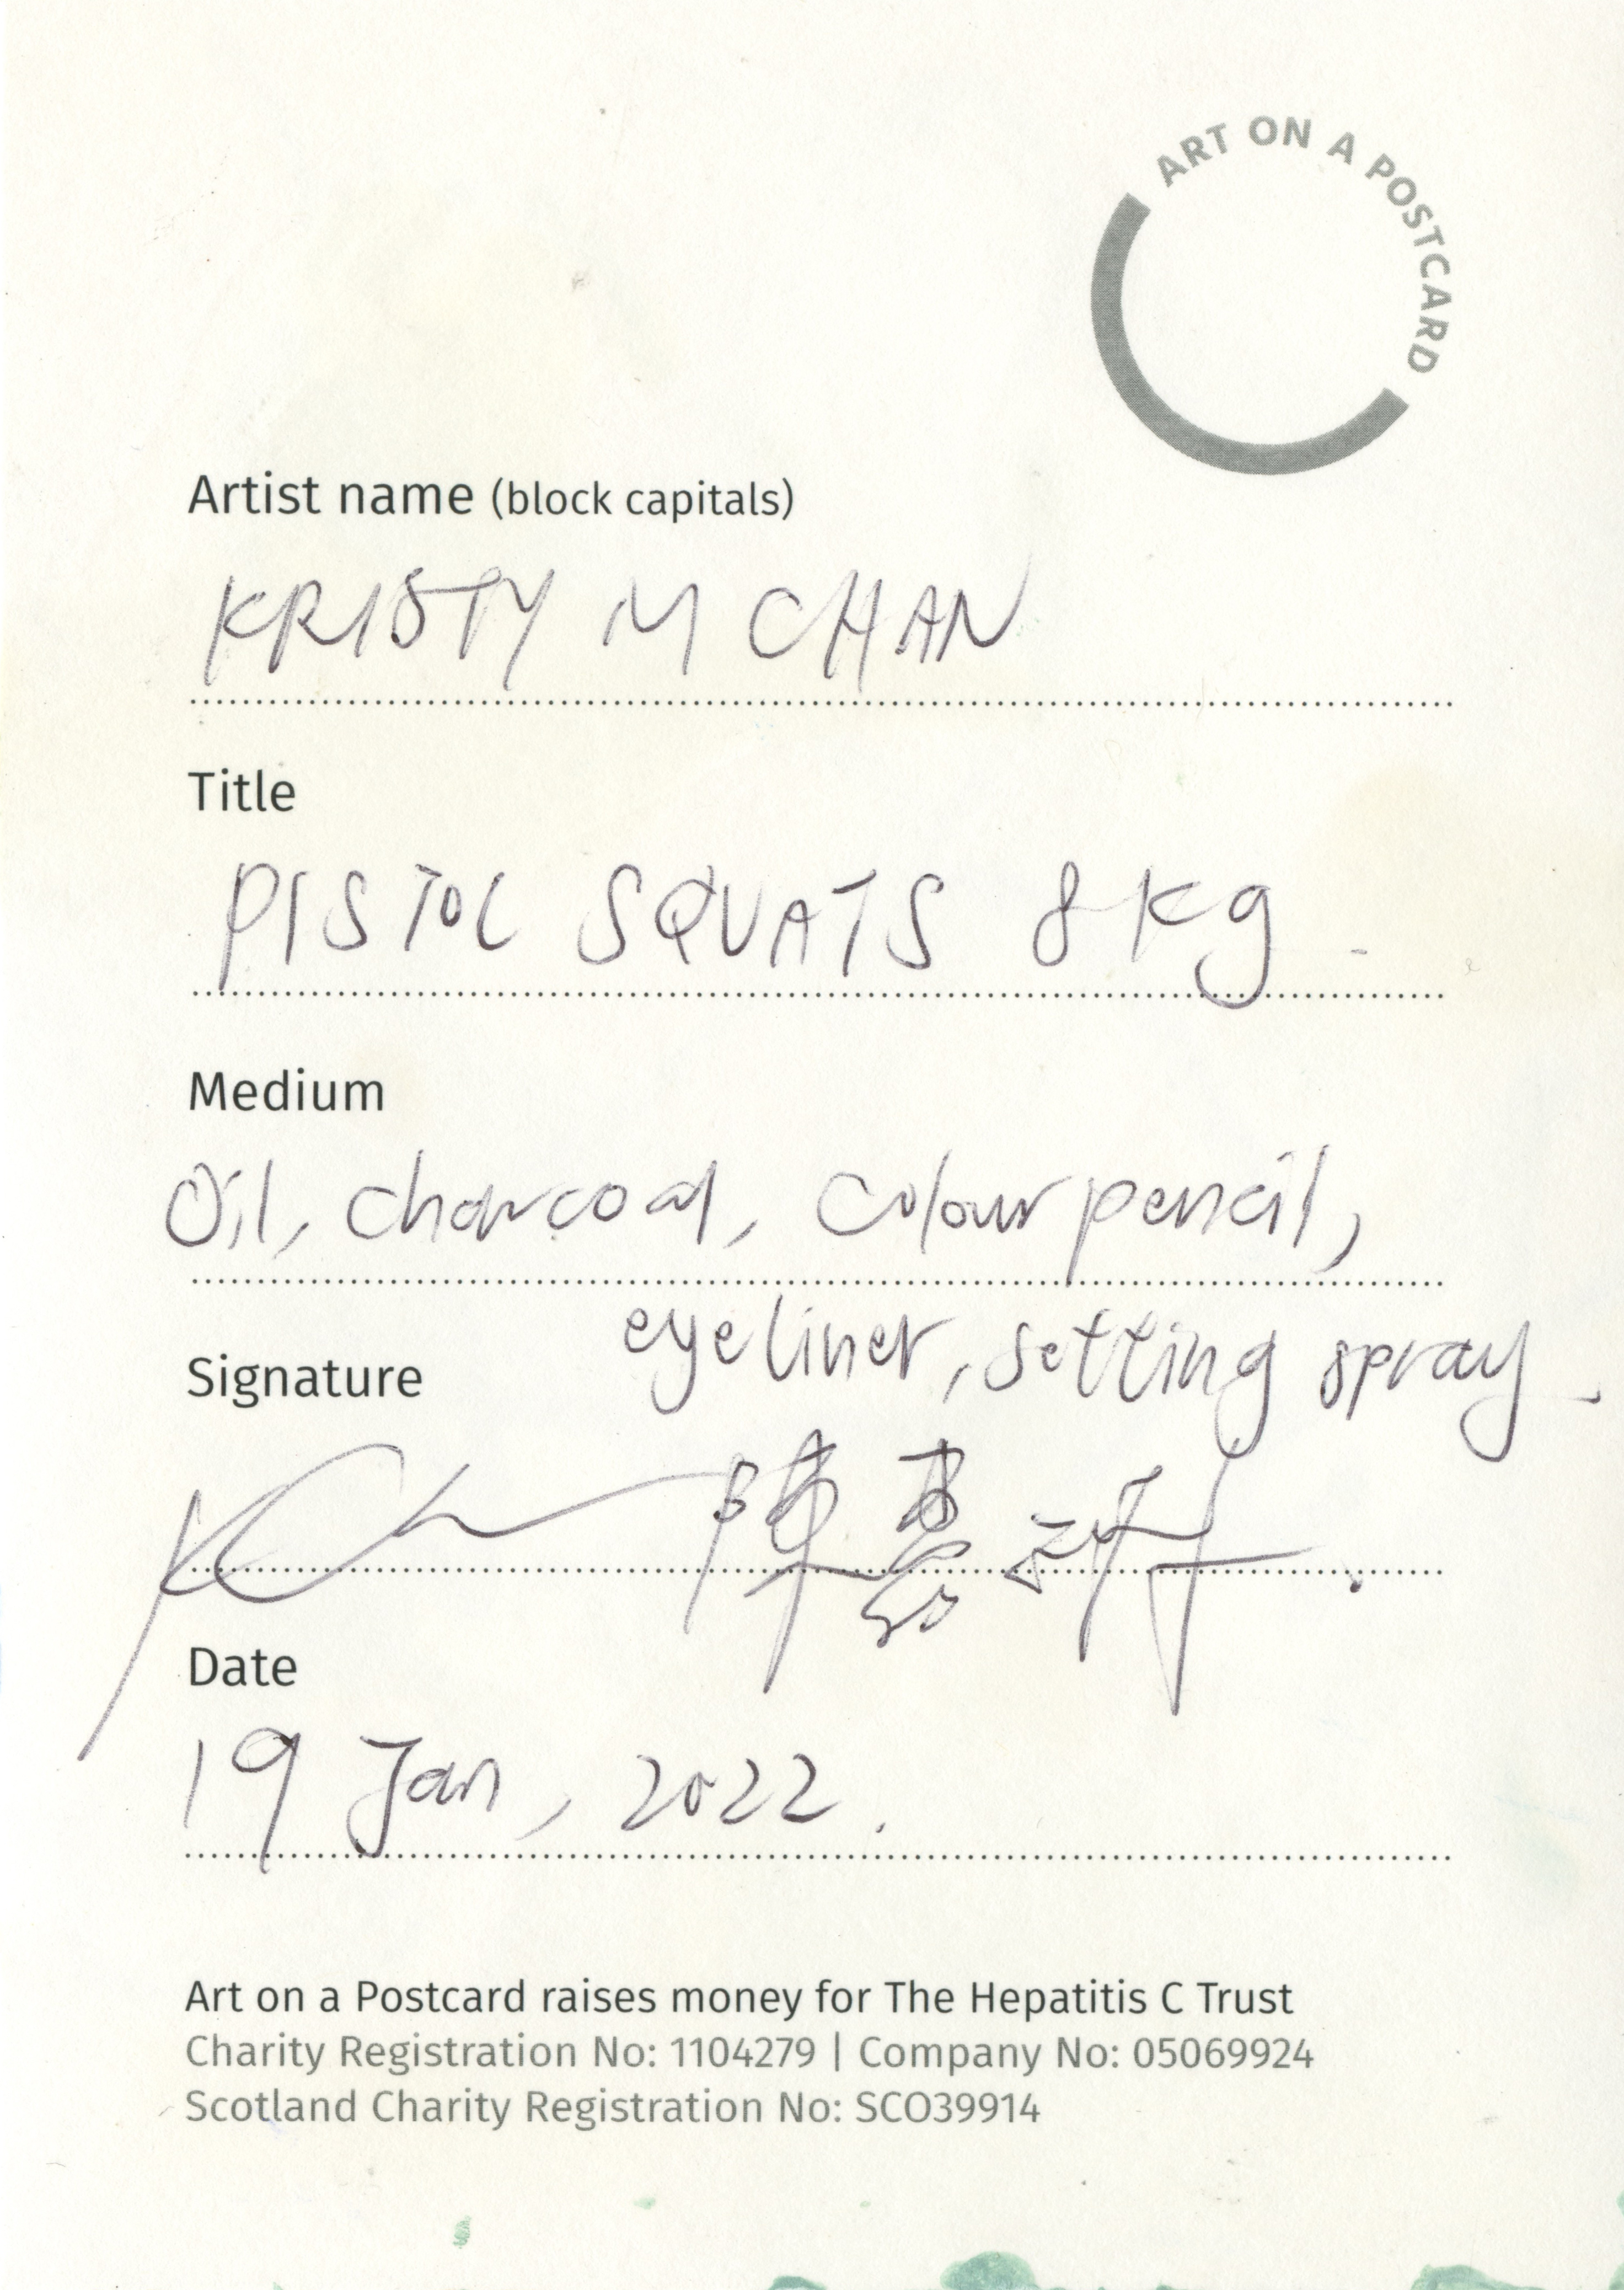 32. Kristy M Chan - Pistol Squats 8kg - BACK